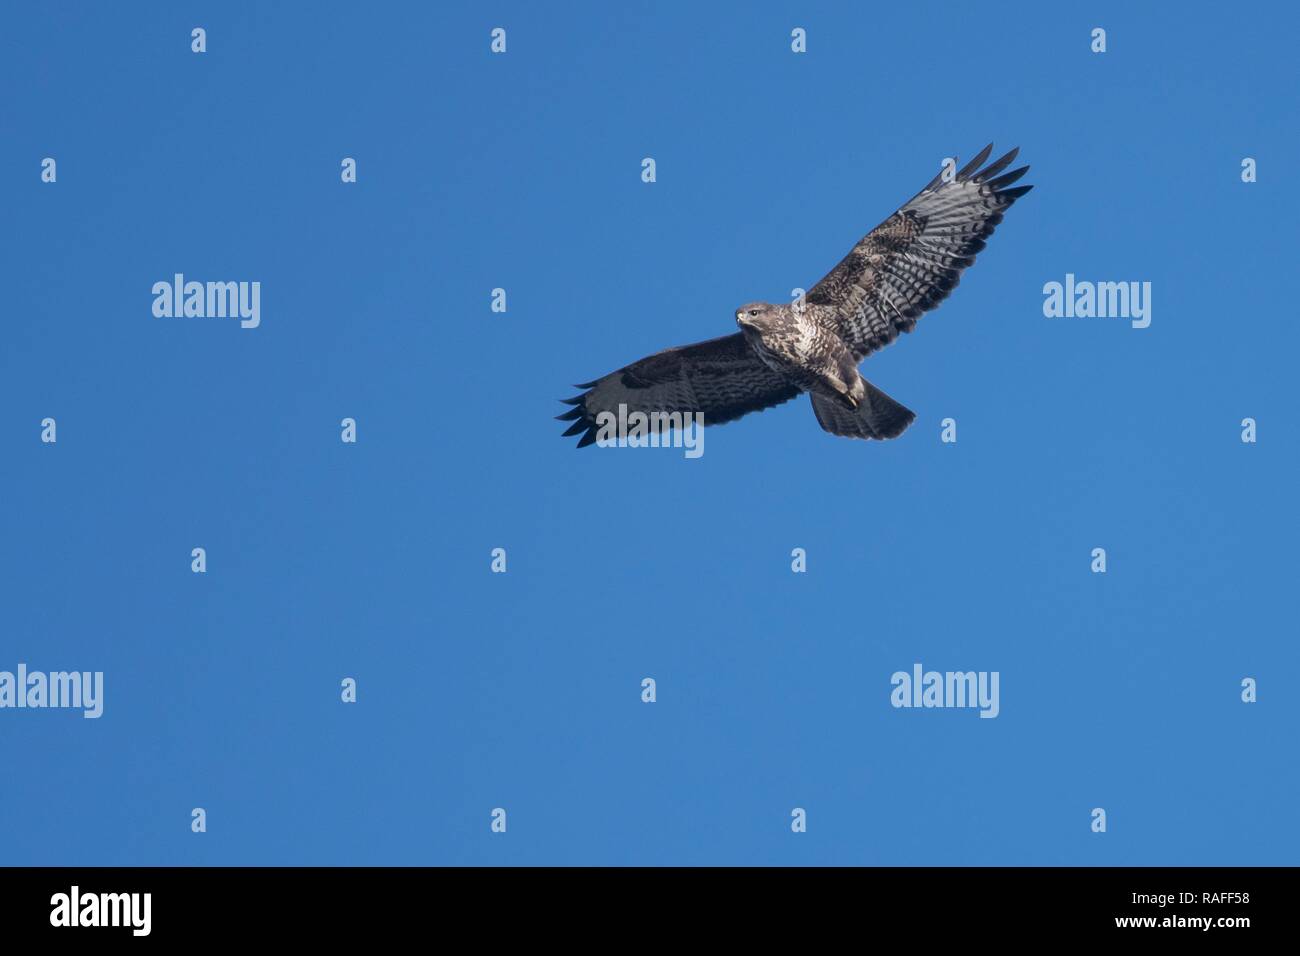 A Buzzard in flight against a blue sky Stock Photo